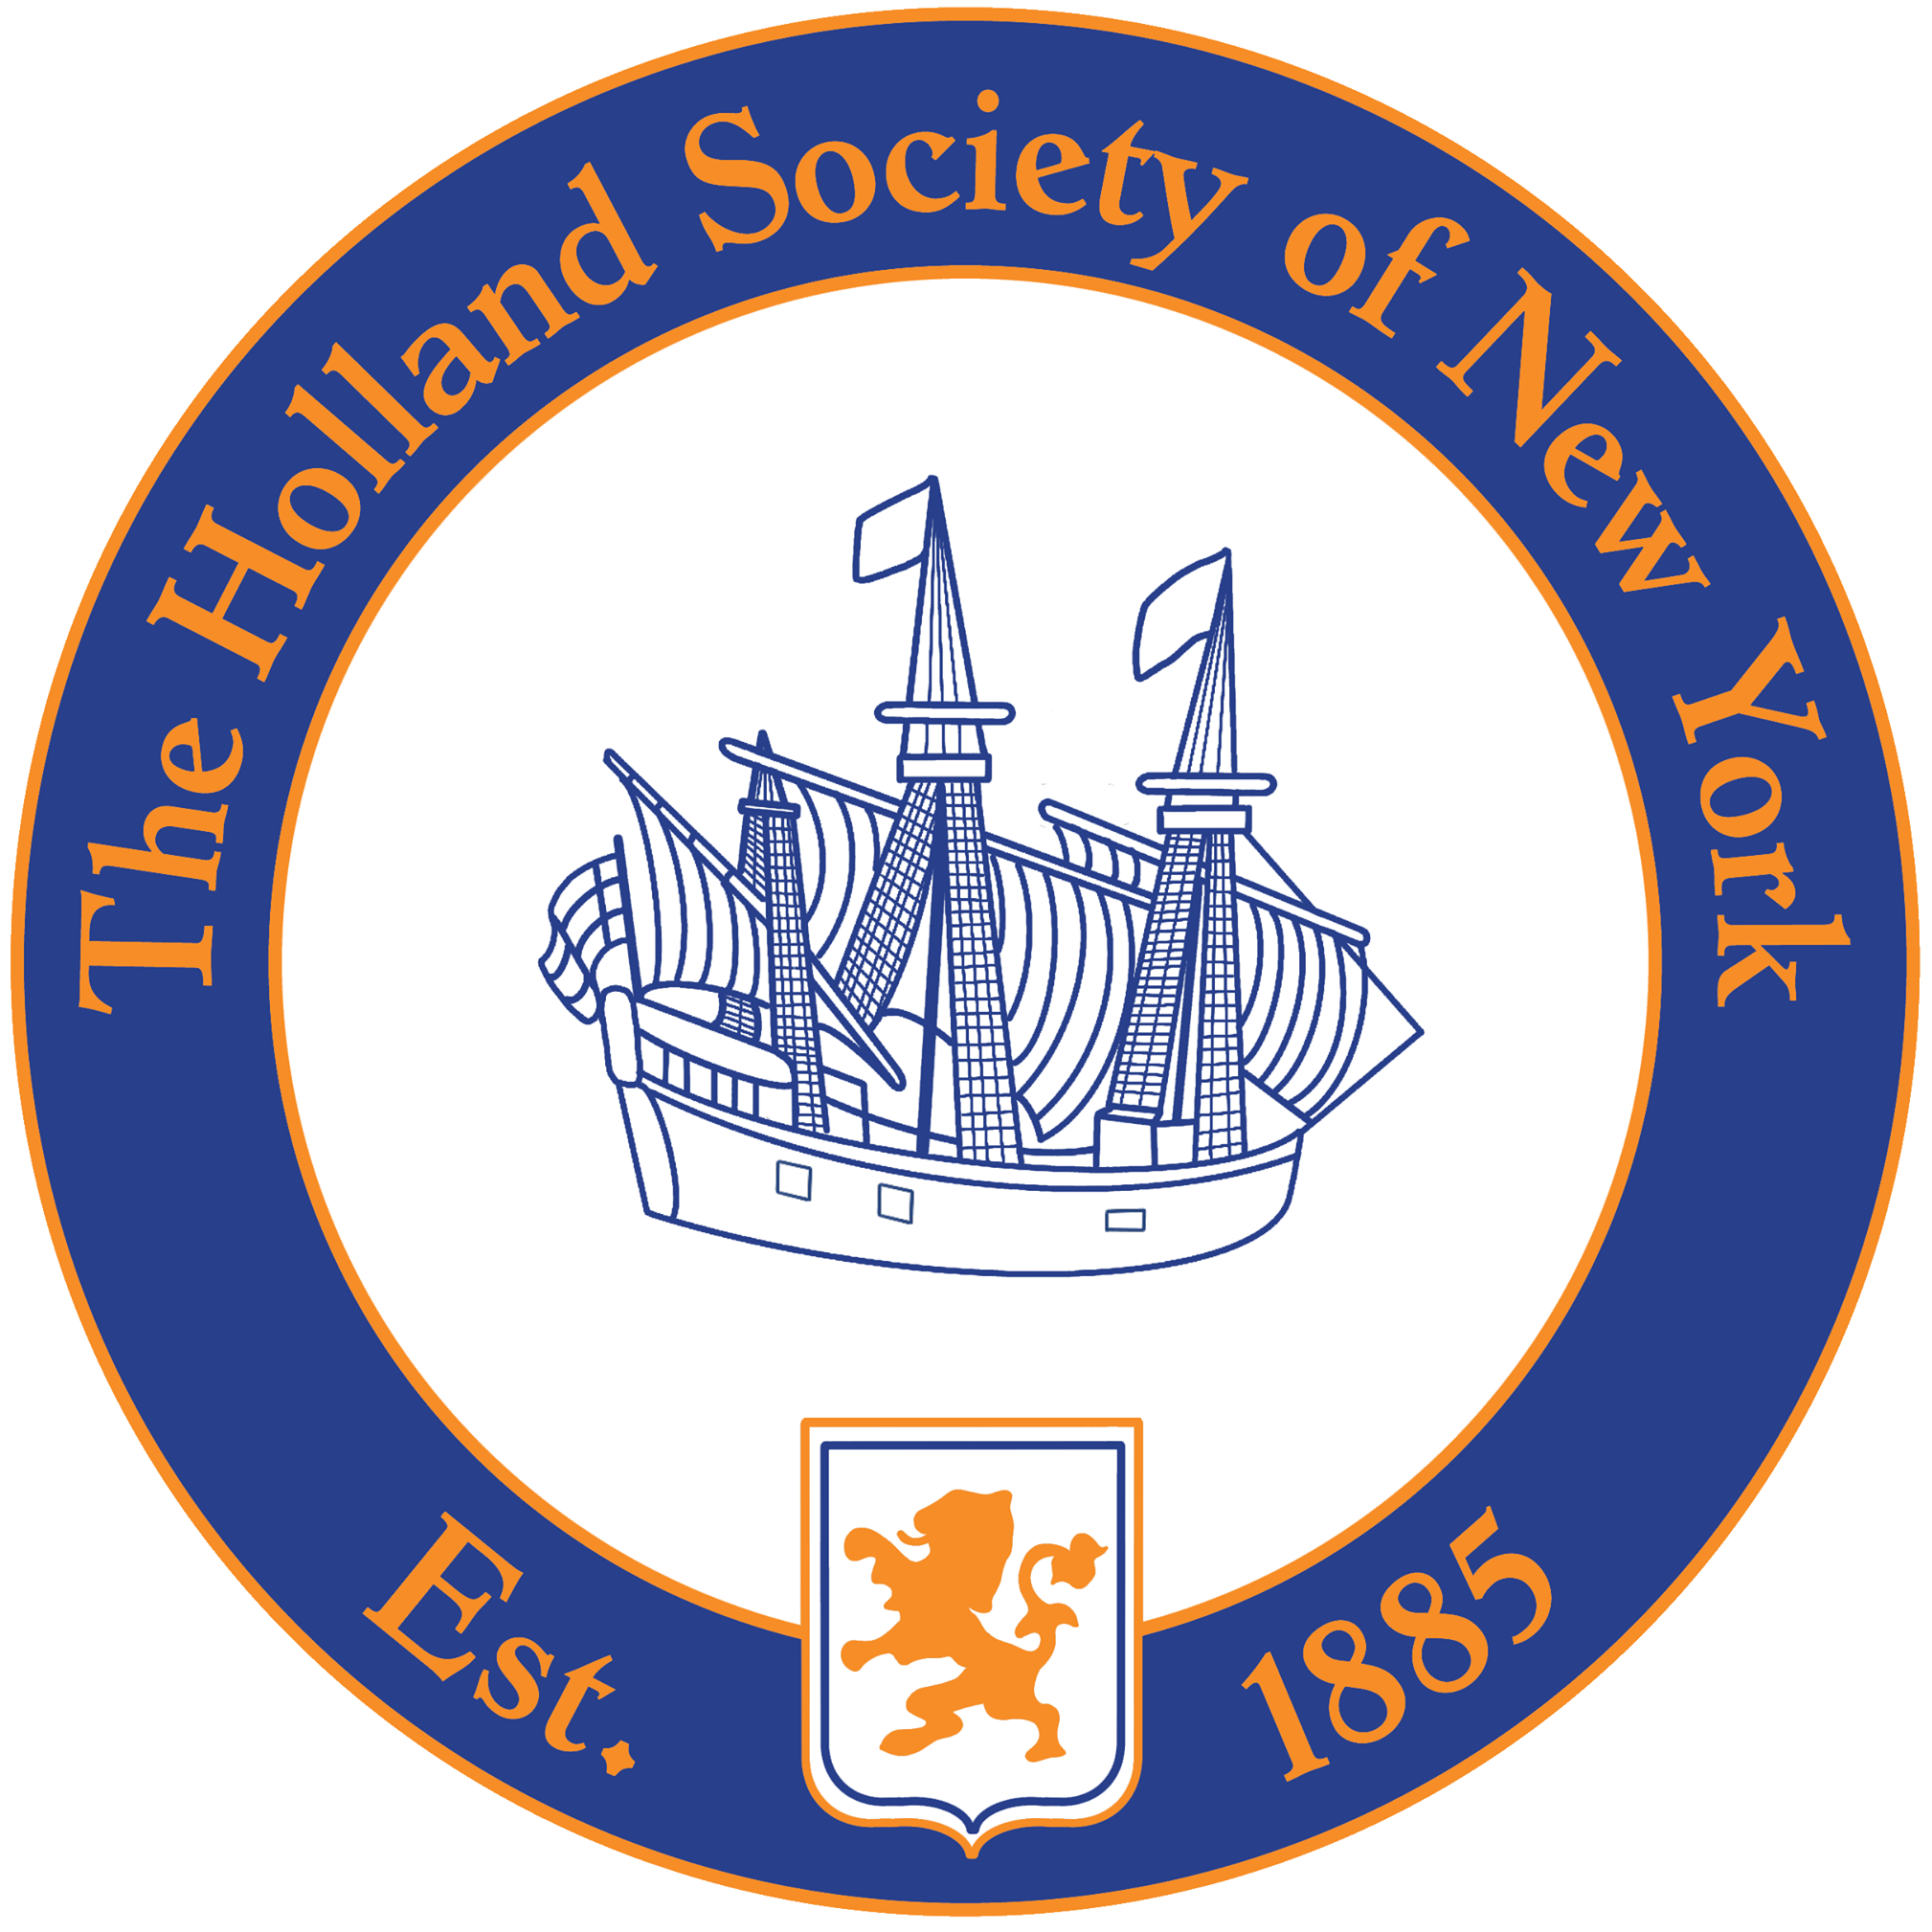 Dutch Organization in New York - The Holland Society of New York